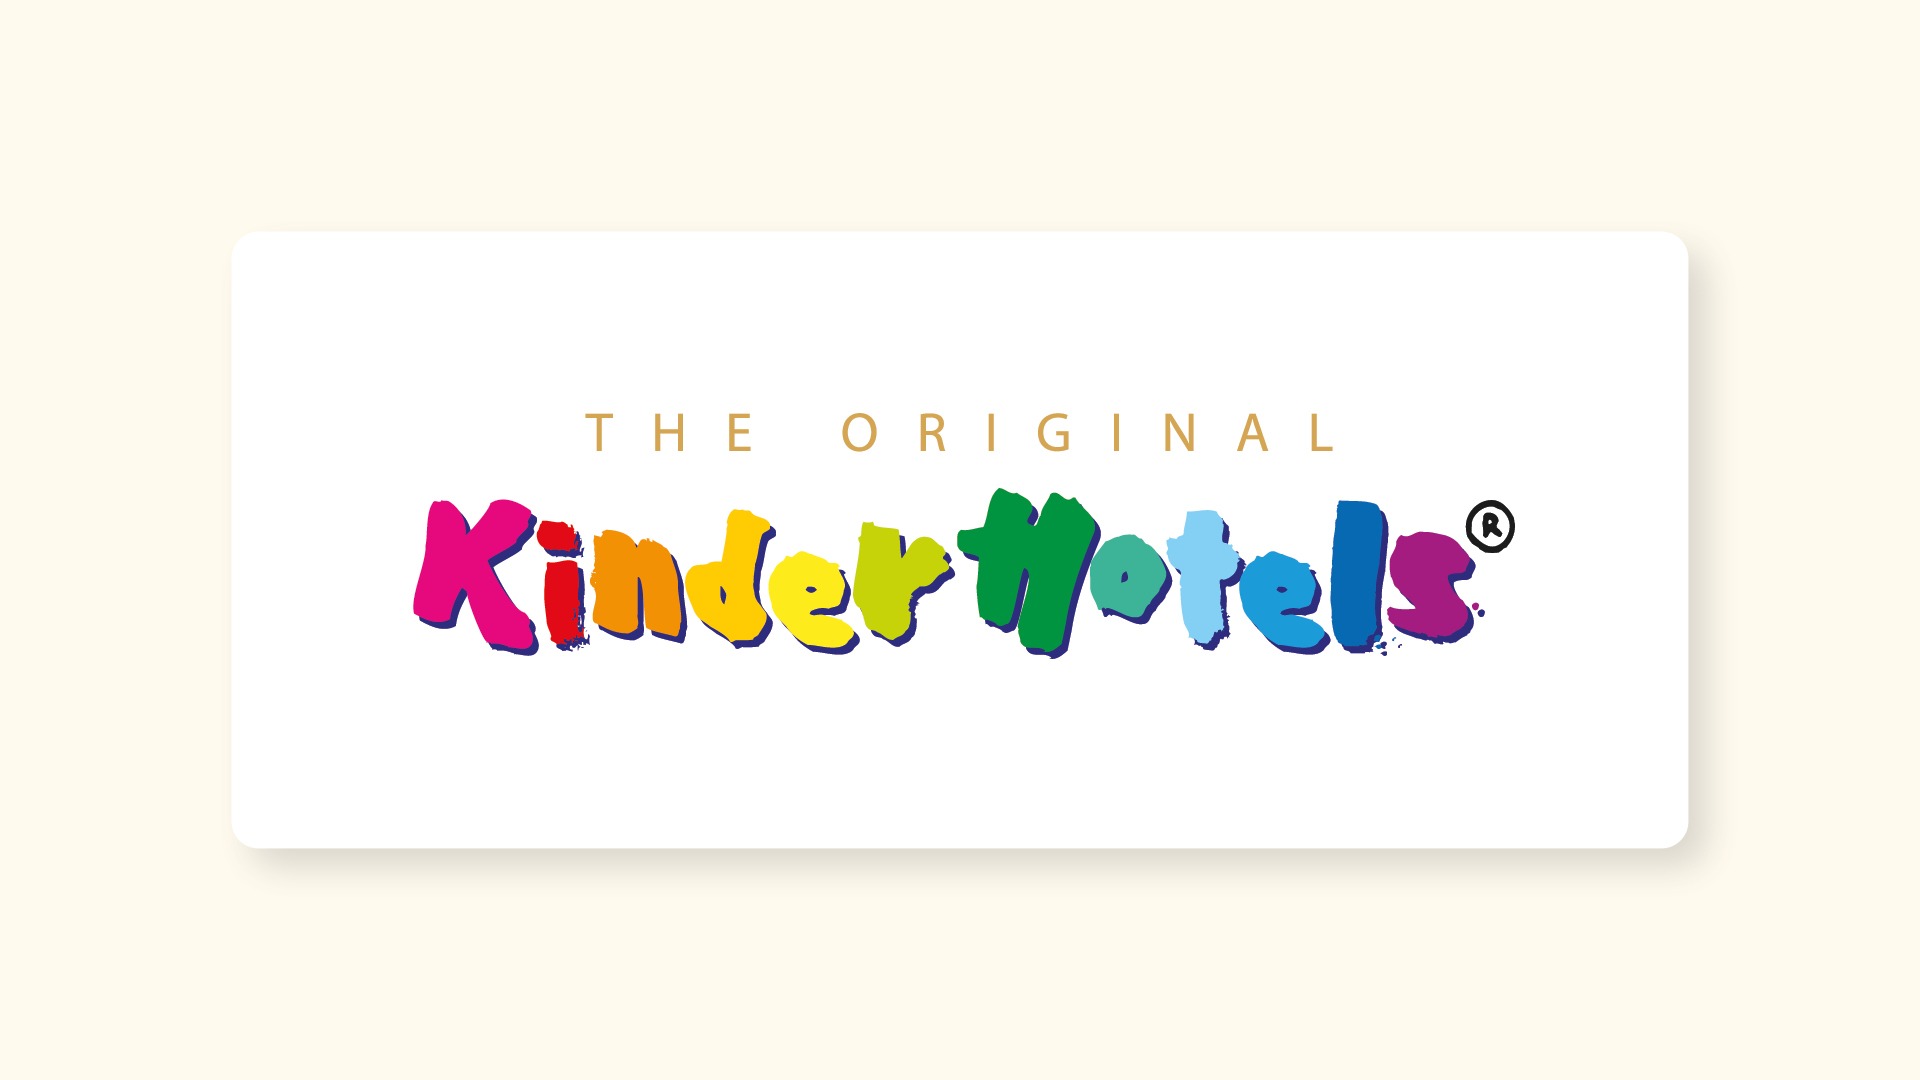 The original Kinderhotels gift card.